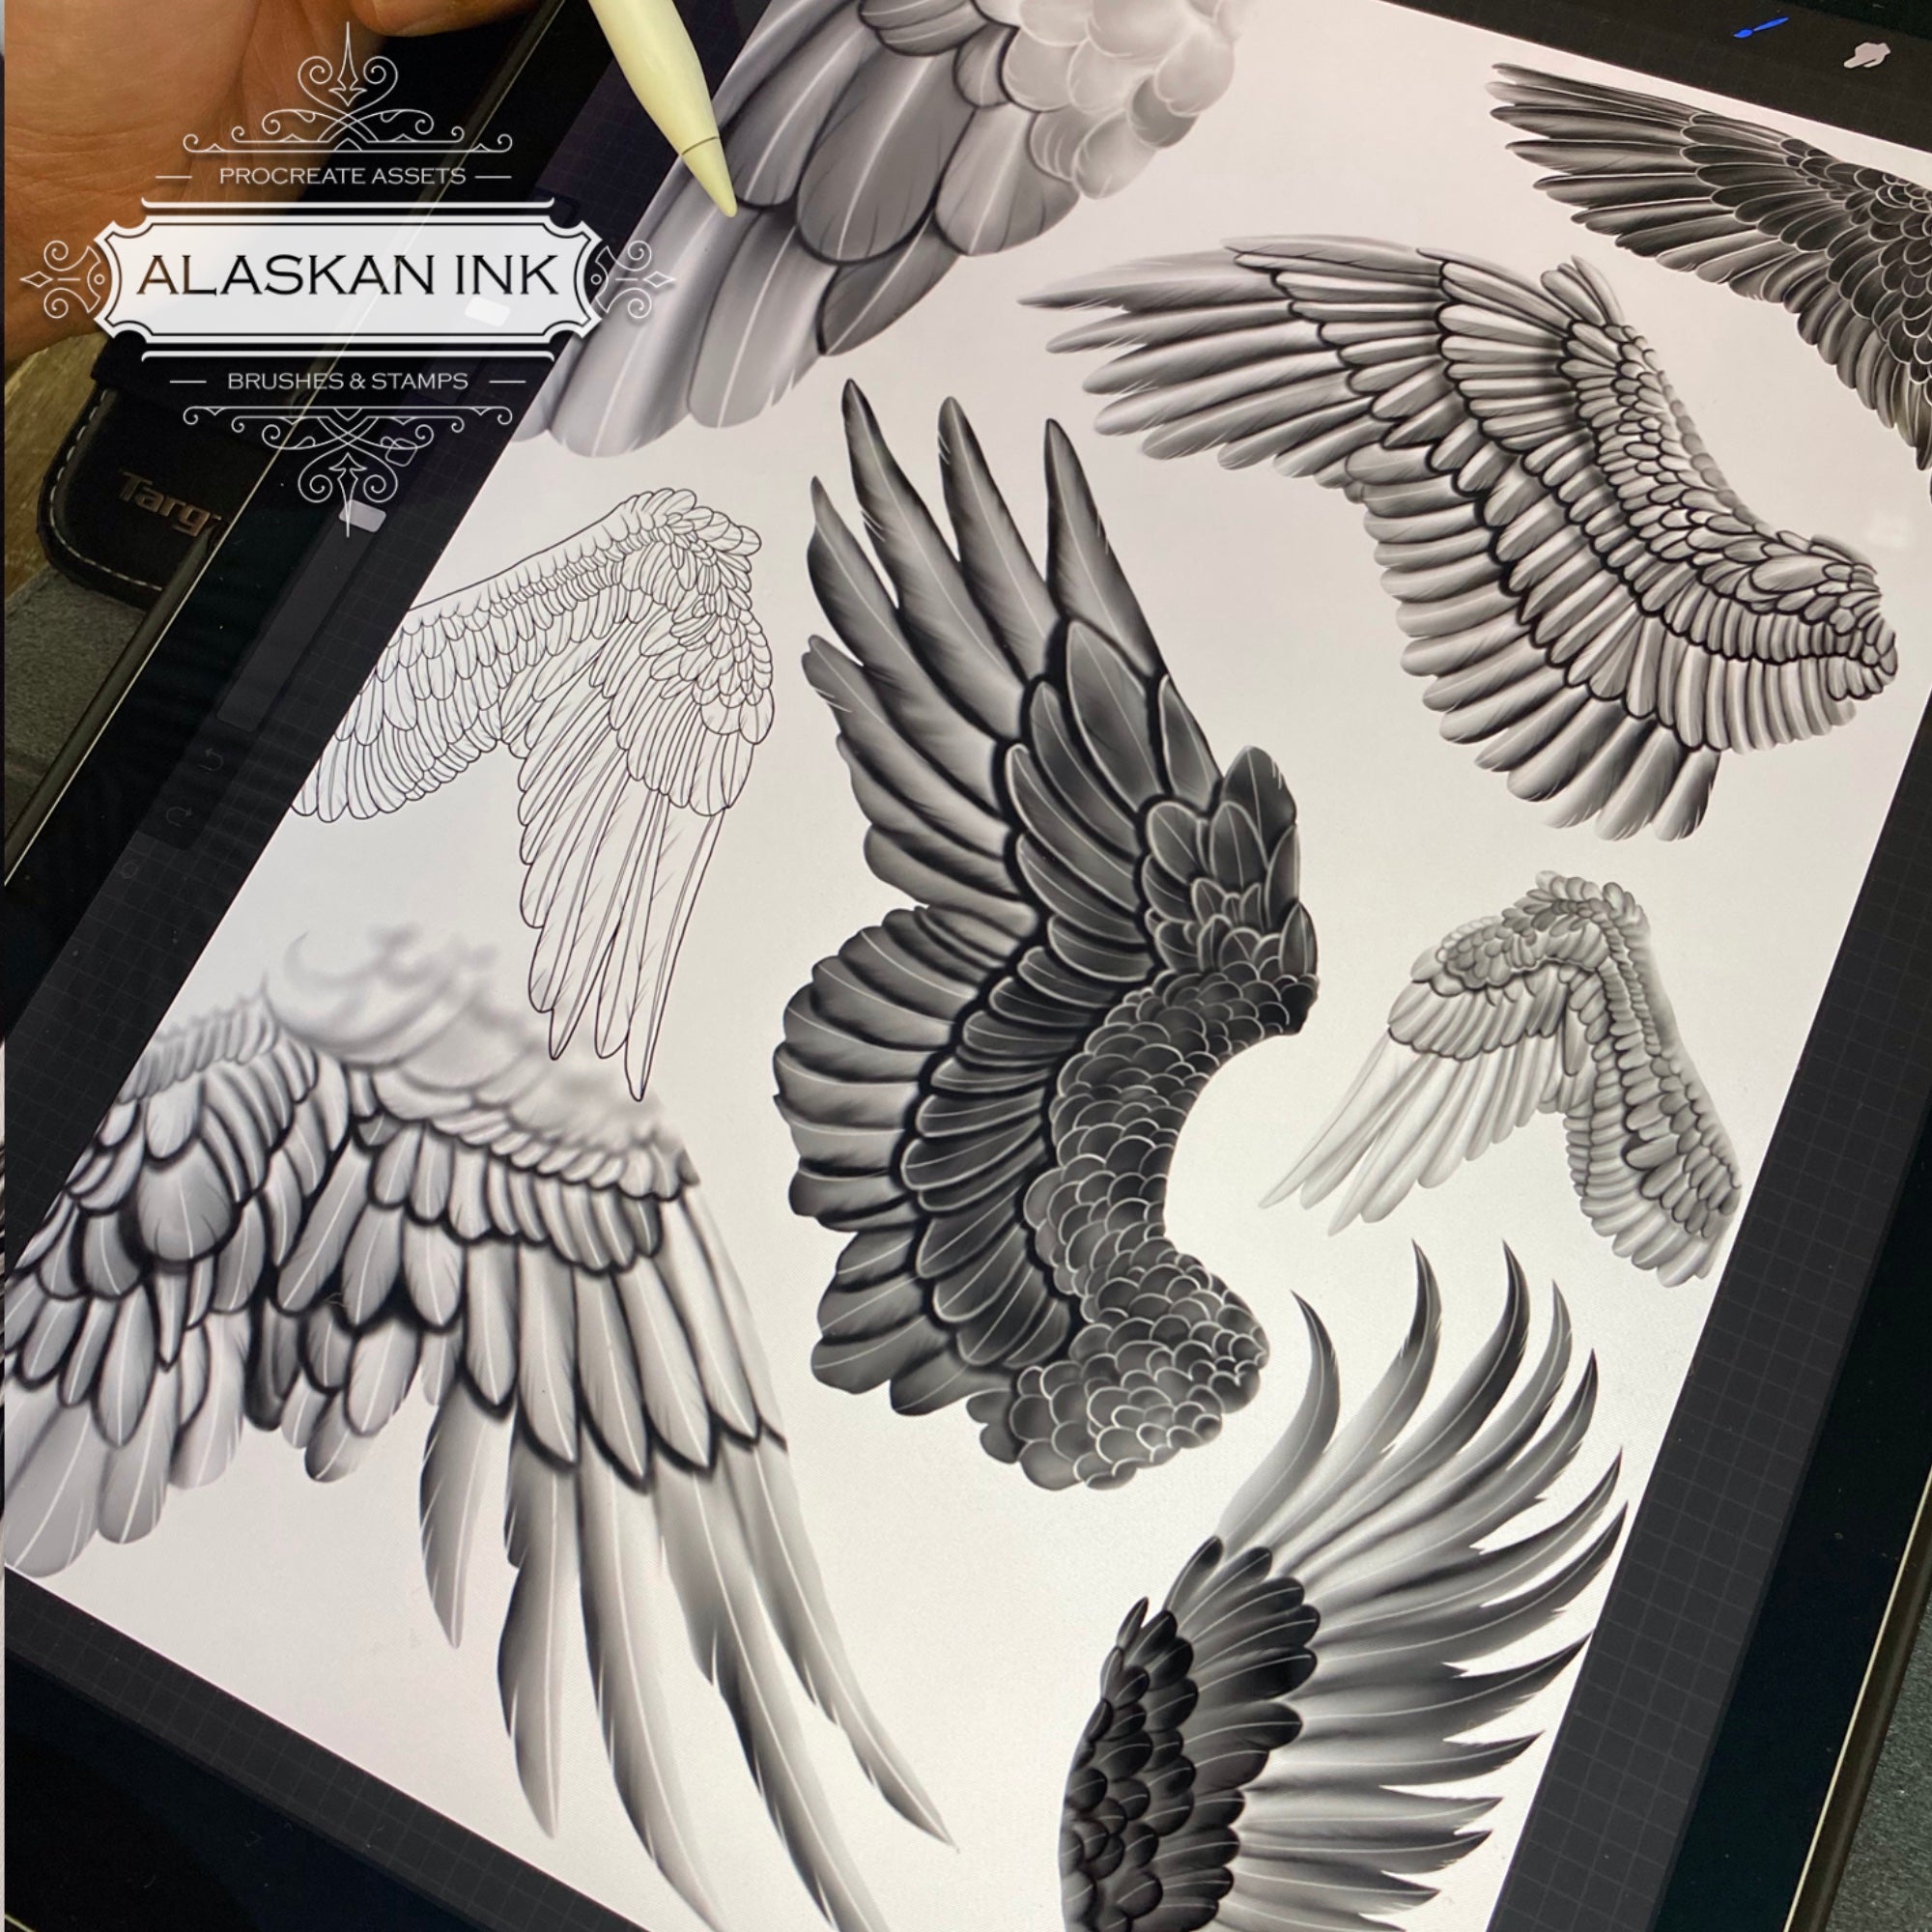 Royal wings tattoo - Tattoo Artist - Self-employed | LinkedIn